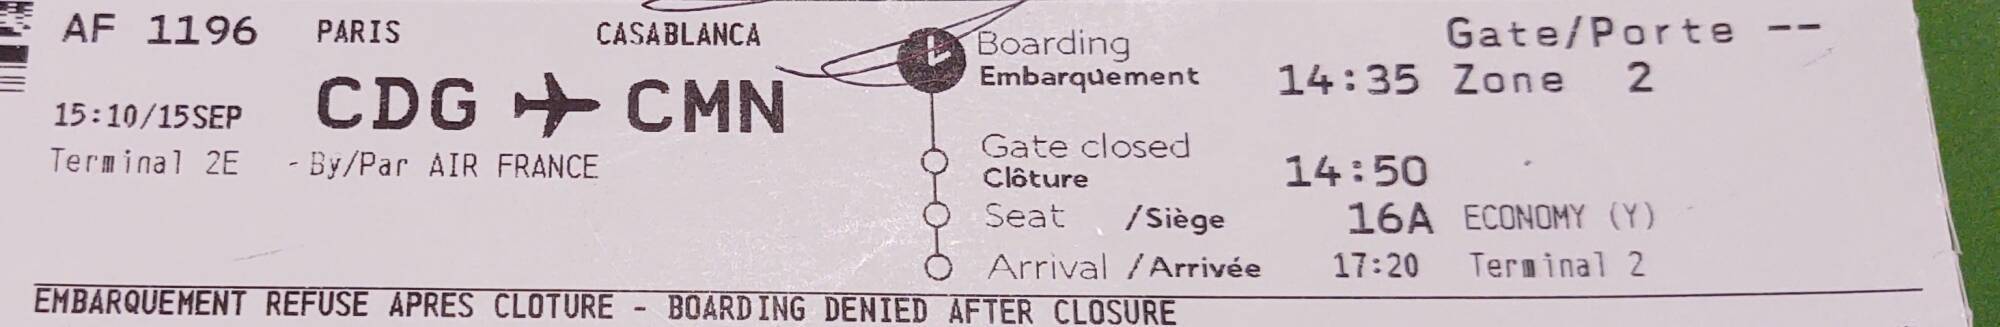 Air France boarding pass to Casablanca.